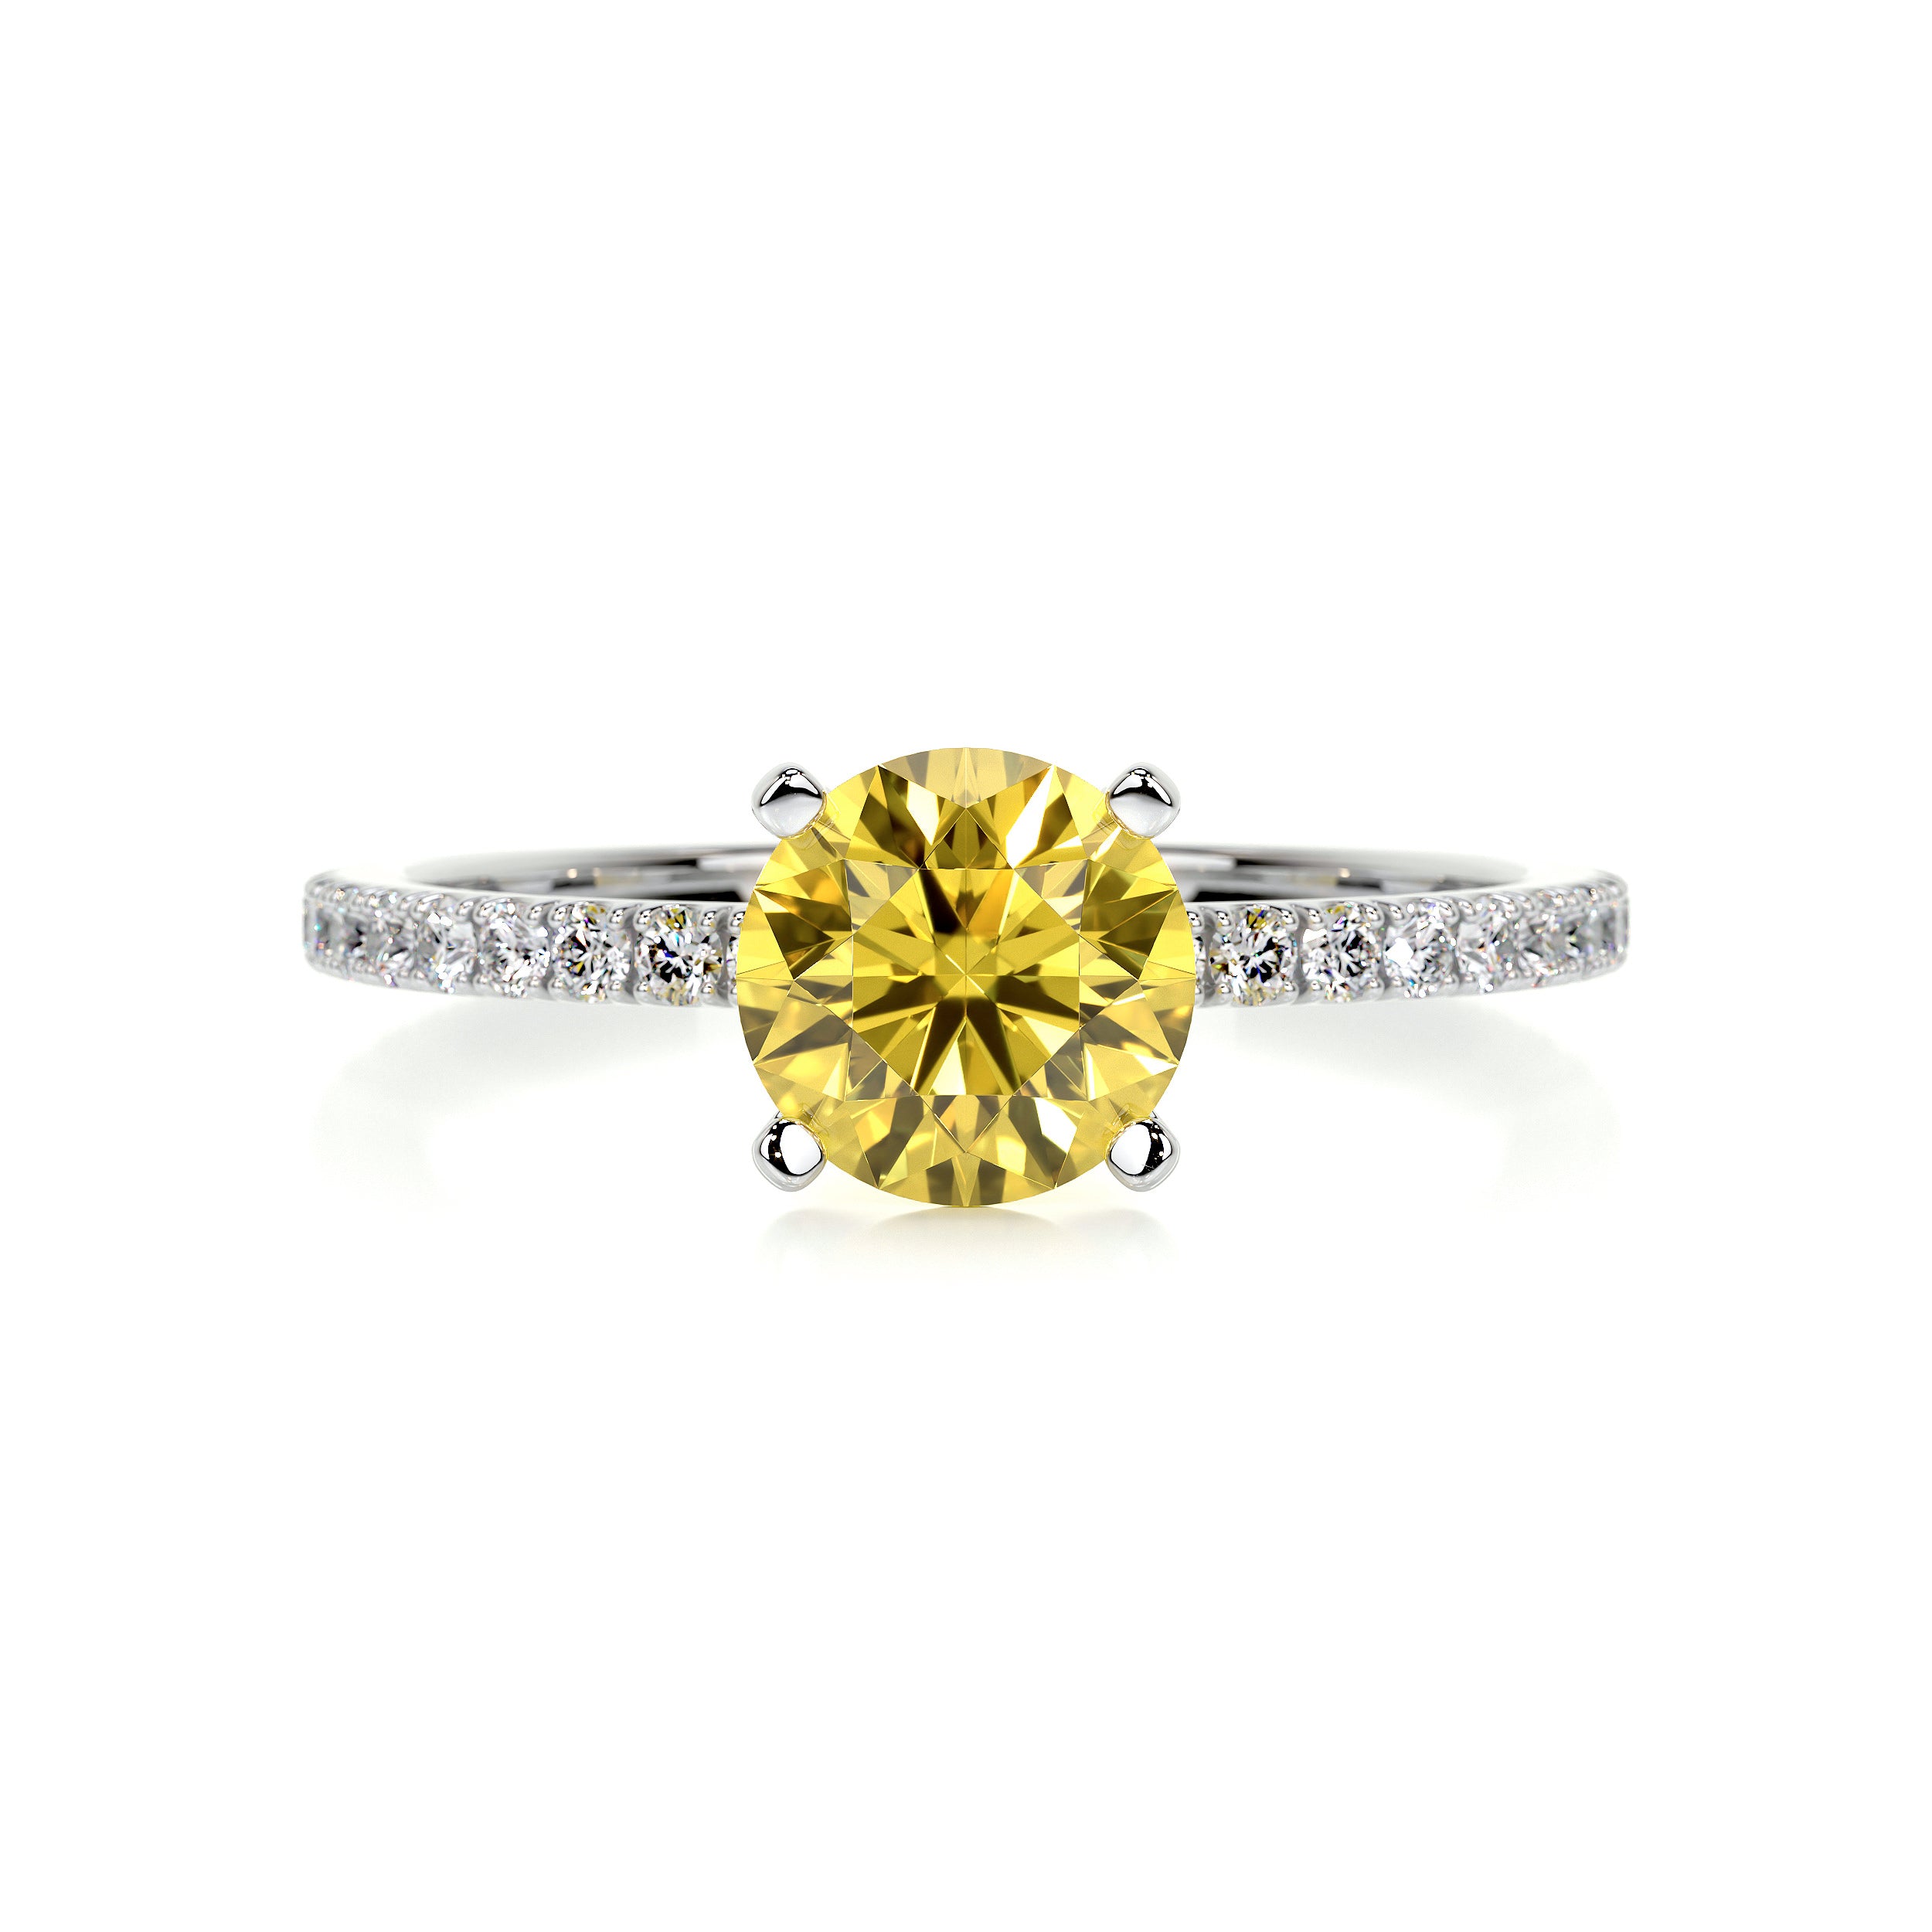 Stephanie Diamond Engagement Ring   (1.3 Carat) -Platinum